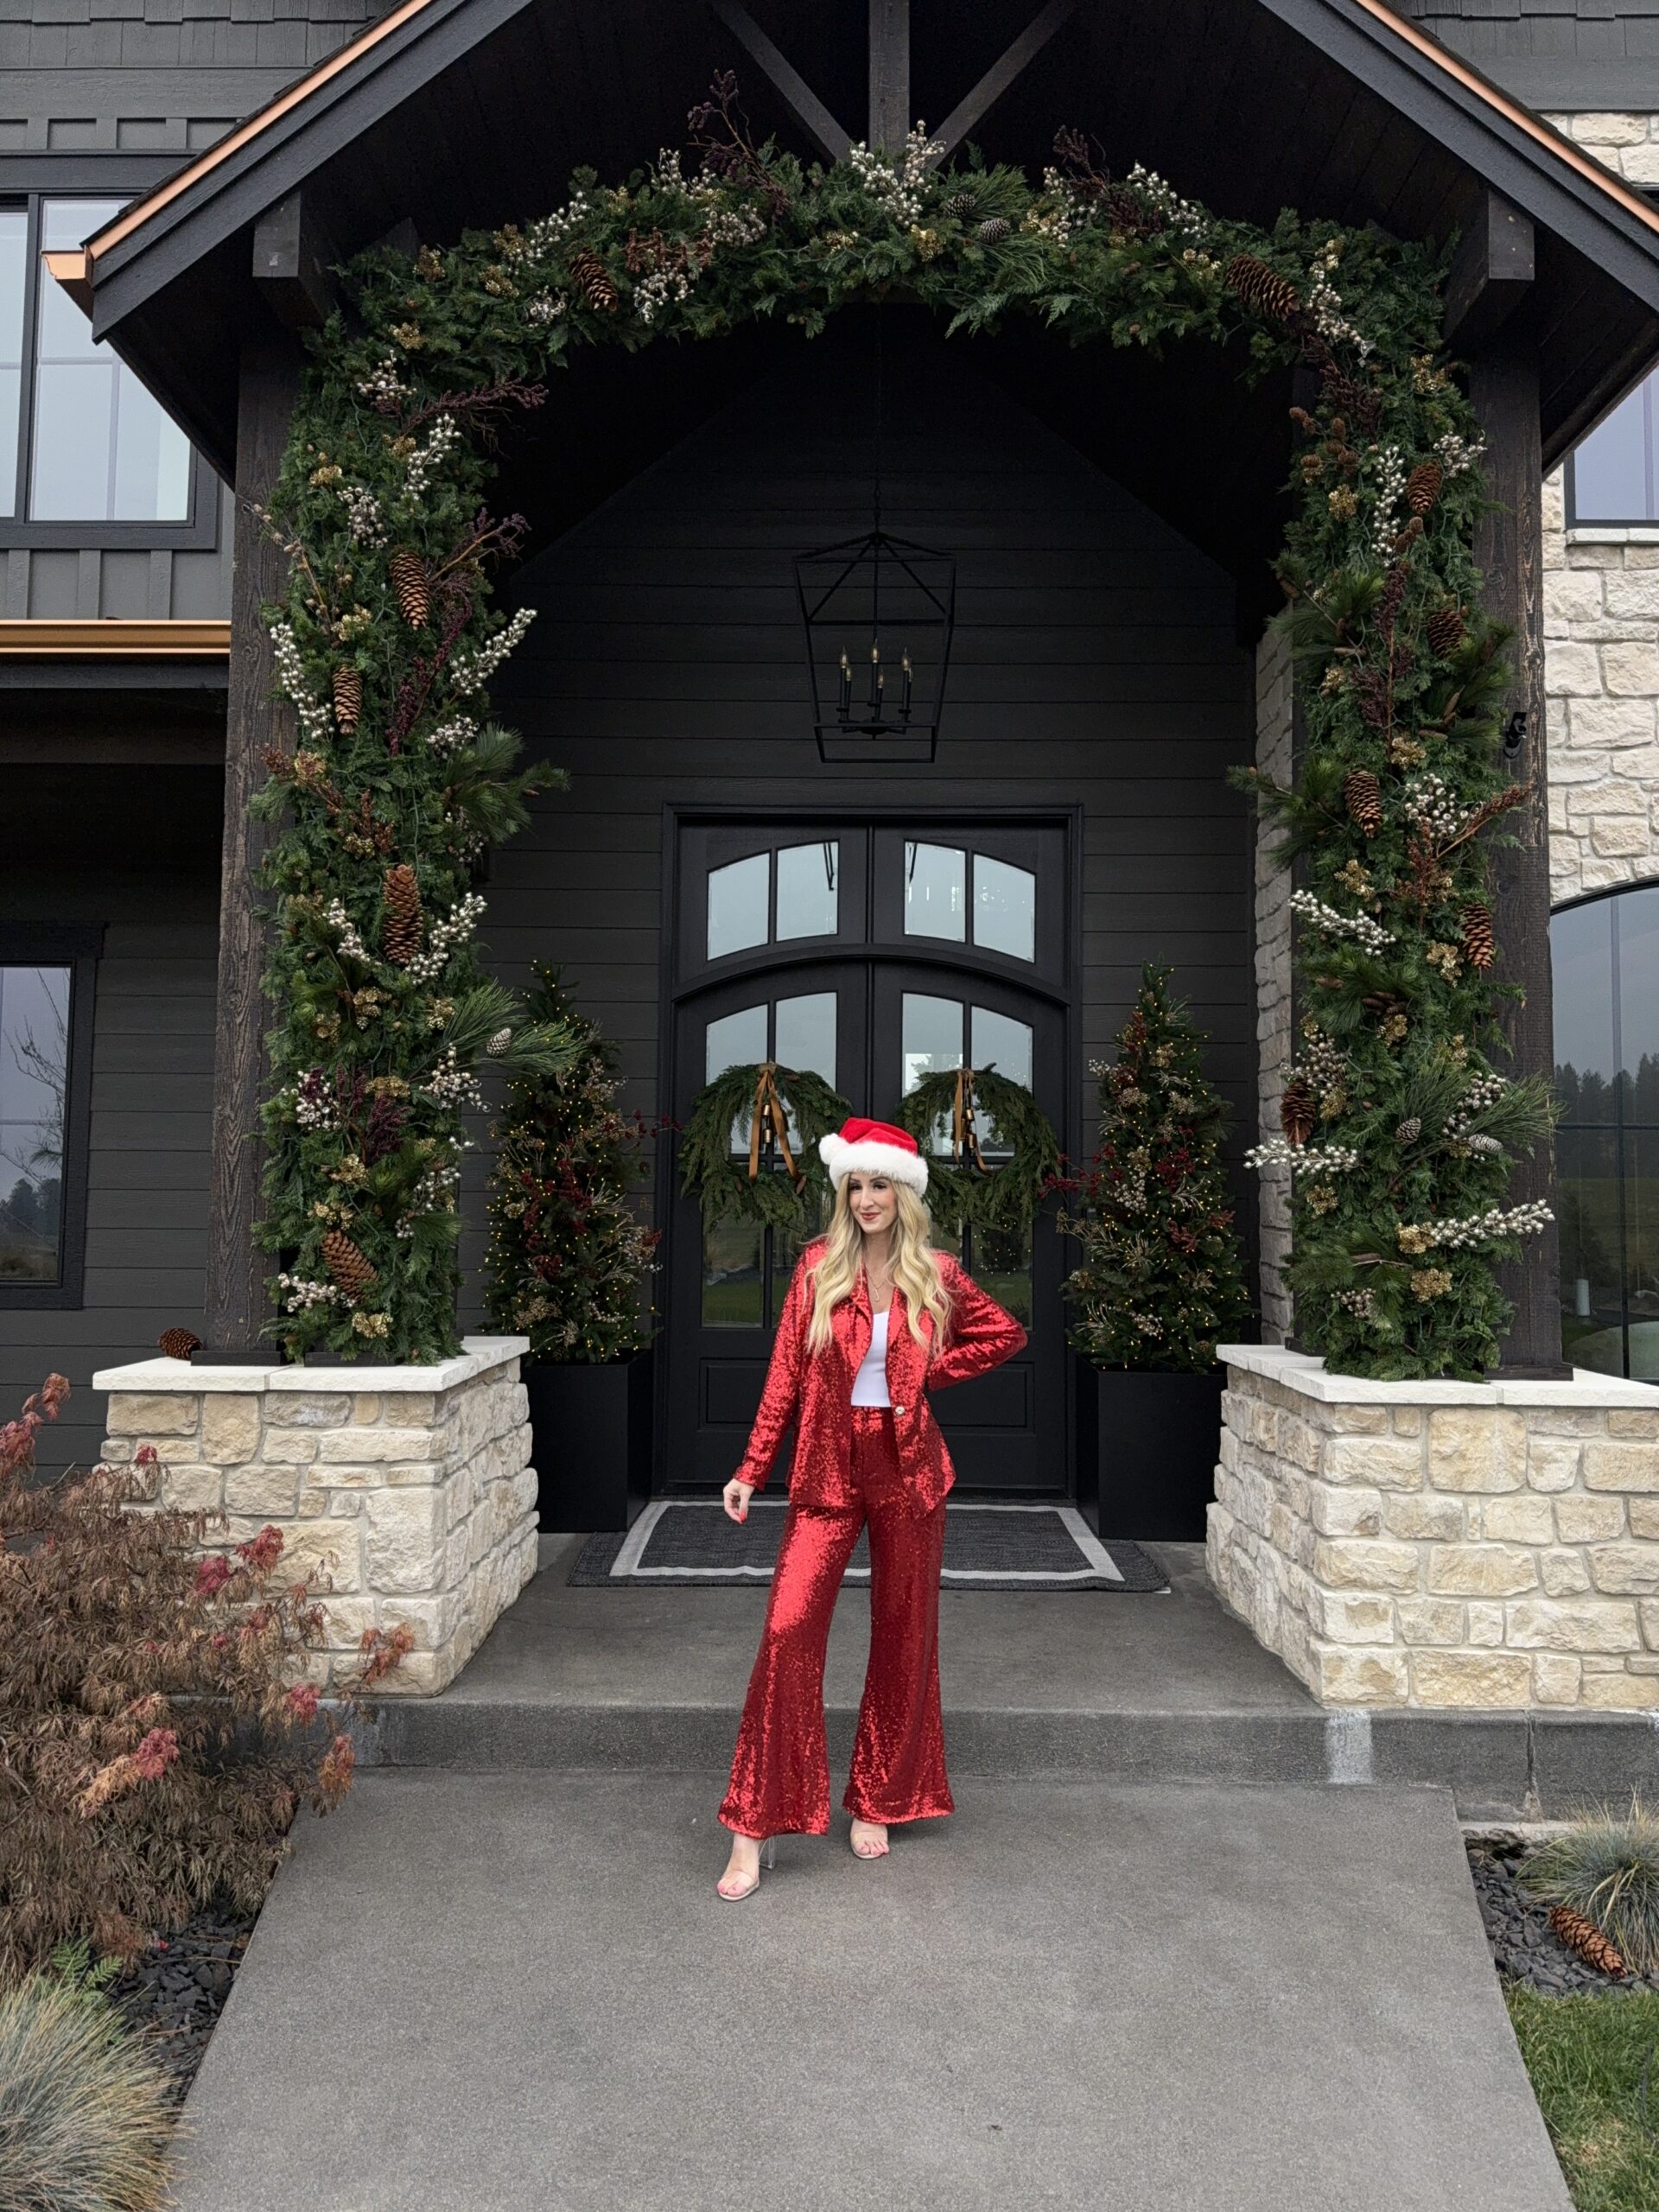 holiday home edit | my front porch | #holiday #holidayhome #holidayhomeedit #frontporch #christmas #christmastree #wreath #ribbon #garland #sequins #santa #clearheels